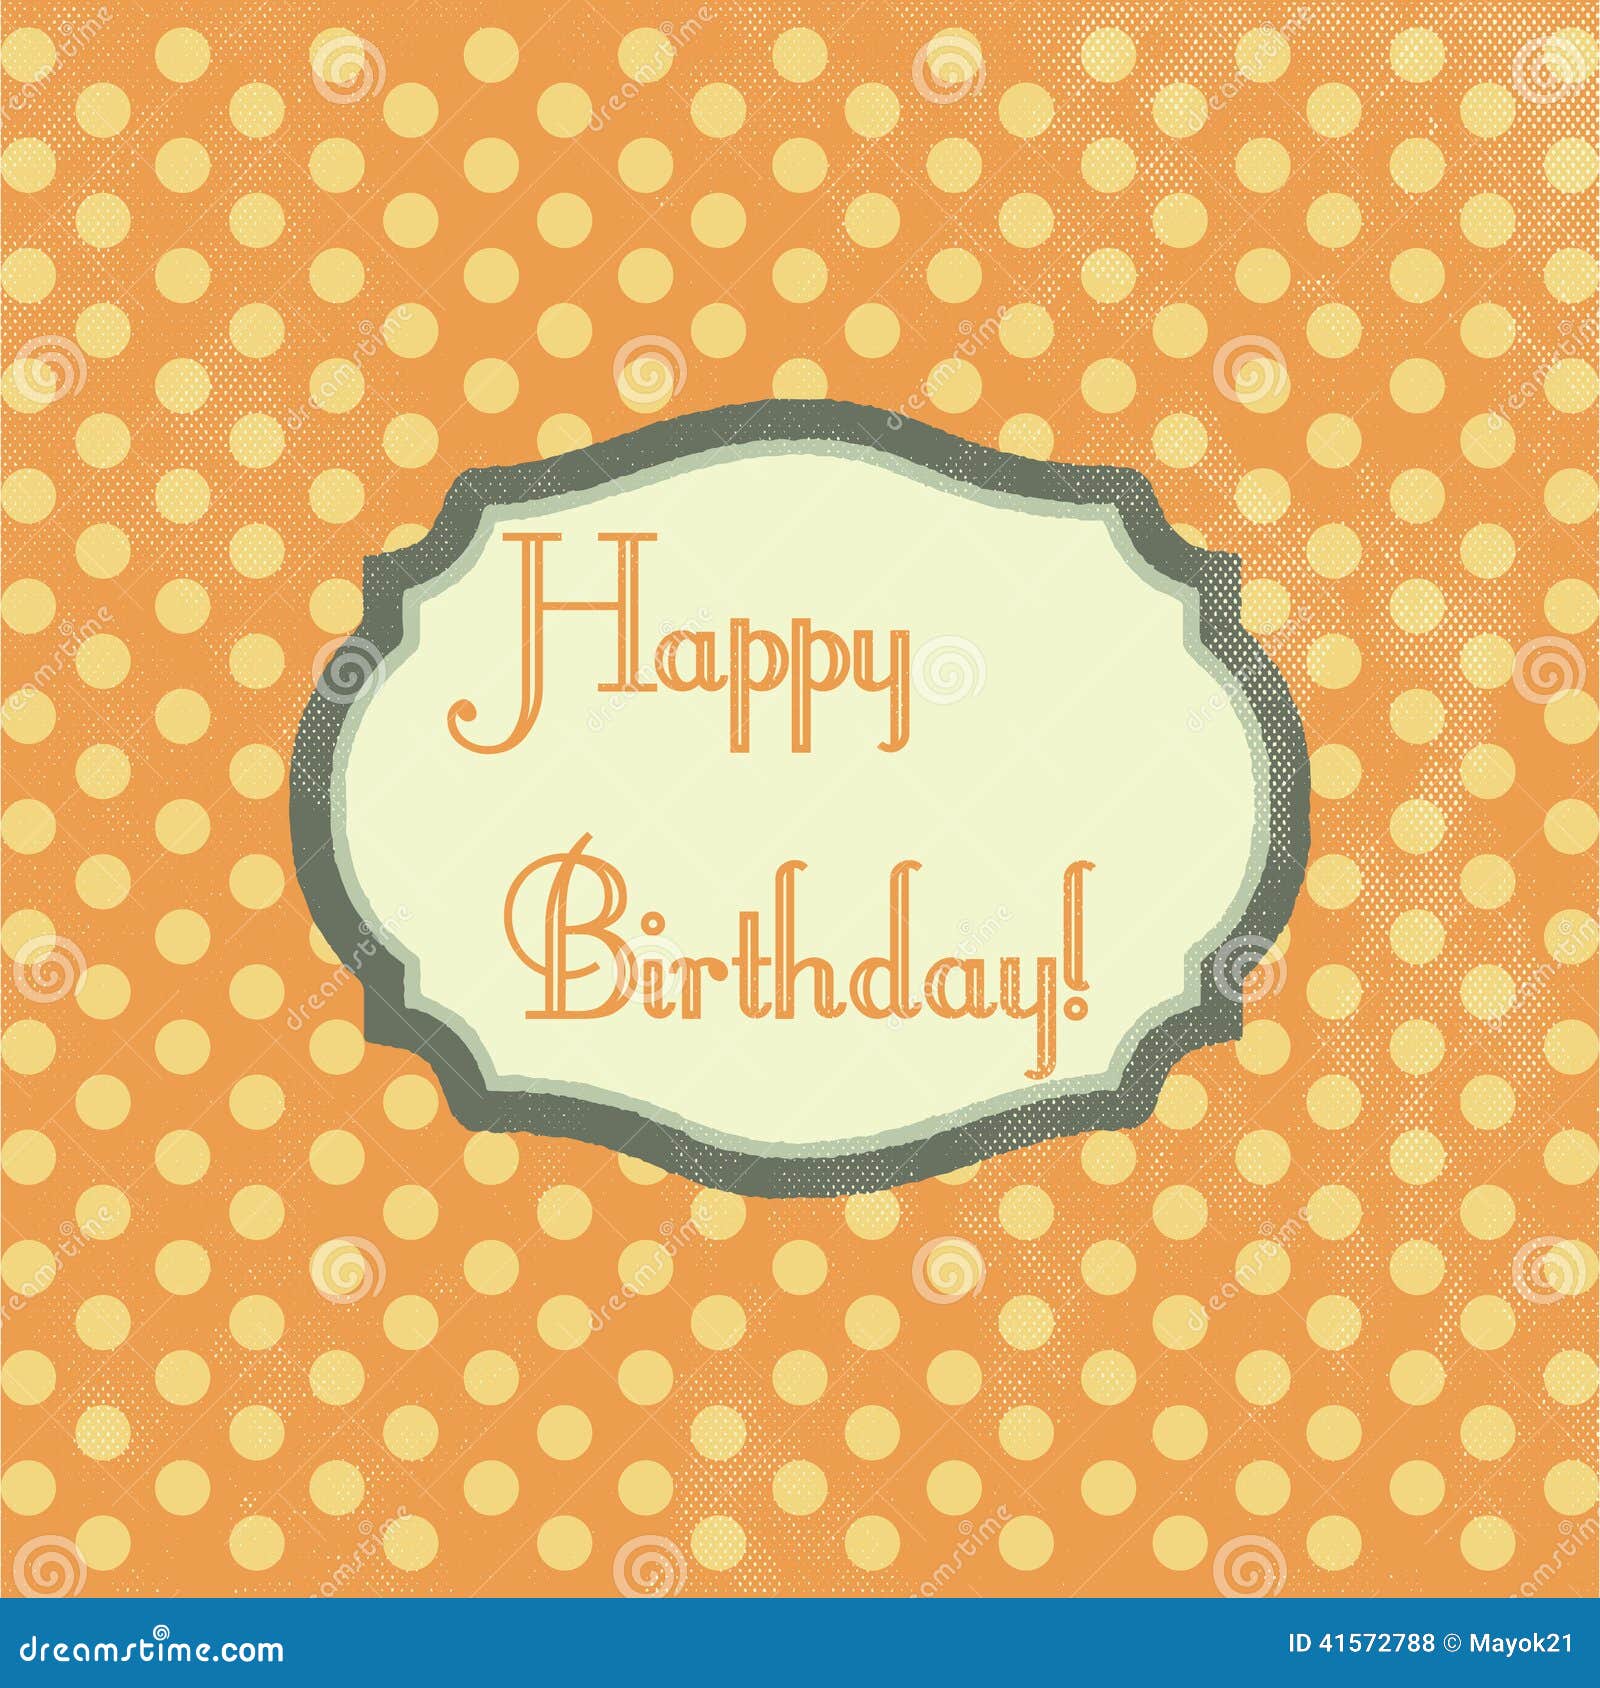 Birthday Greeting Retro Design Card Stock Vector - Illustration of ...